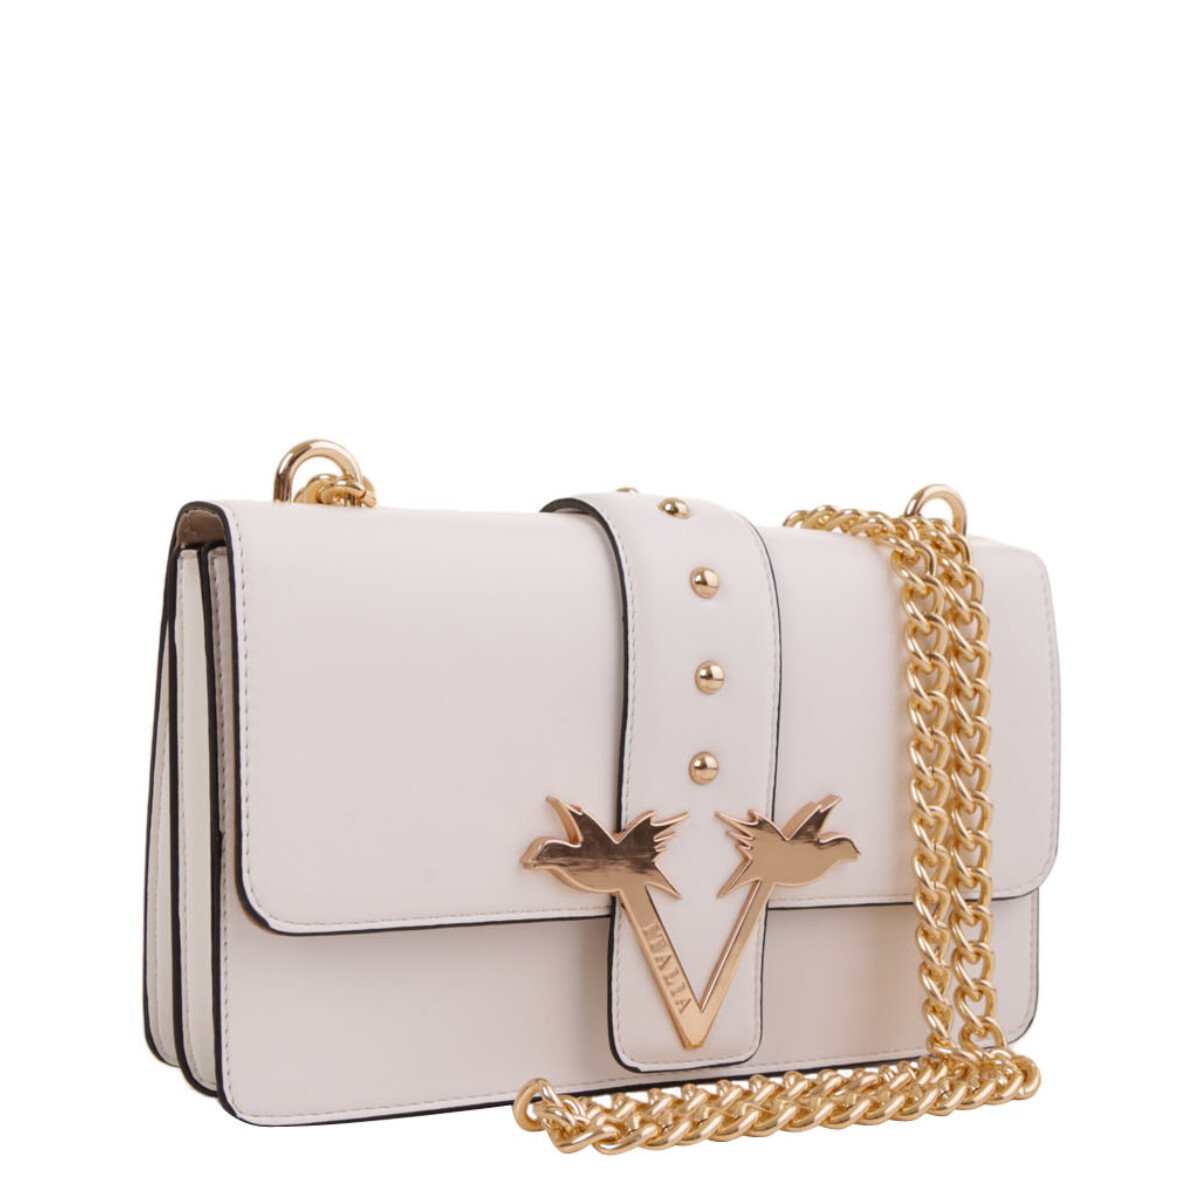 19v69 italia by Versace Handbags - Germany, New - The wholesale platform |  Merkandi B2B